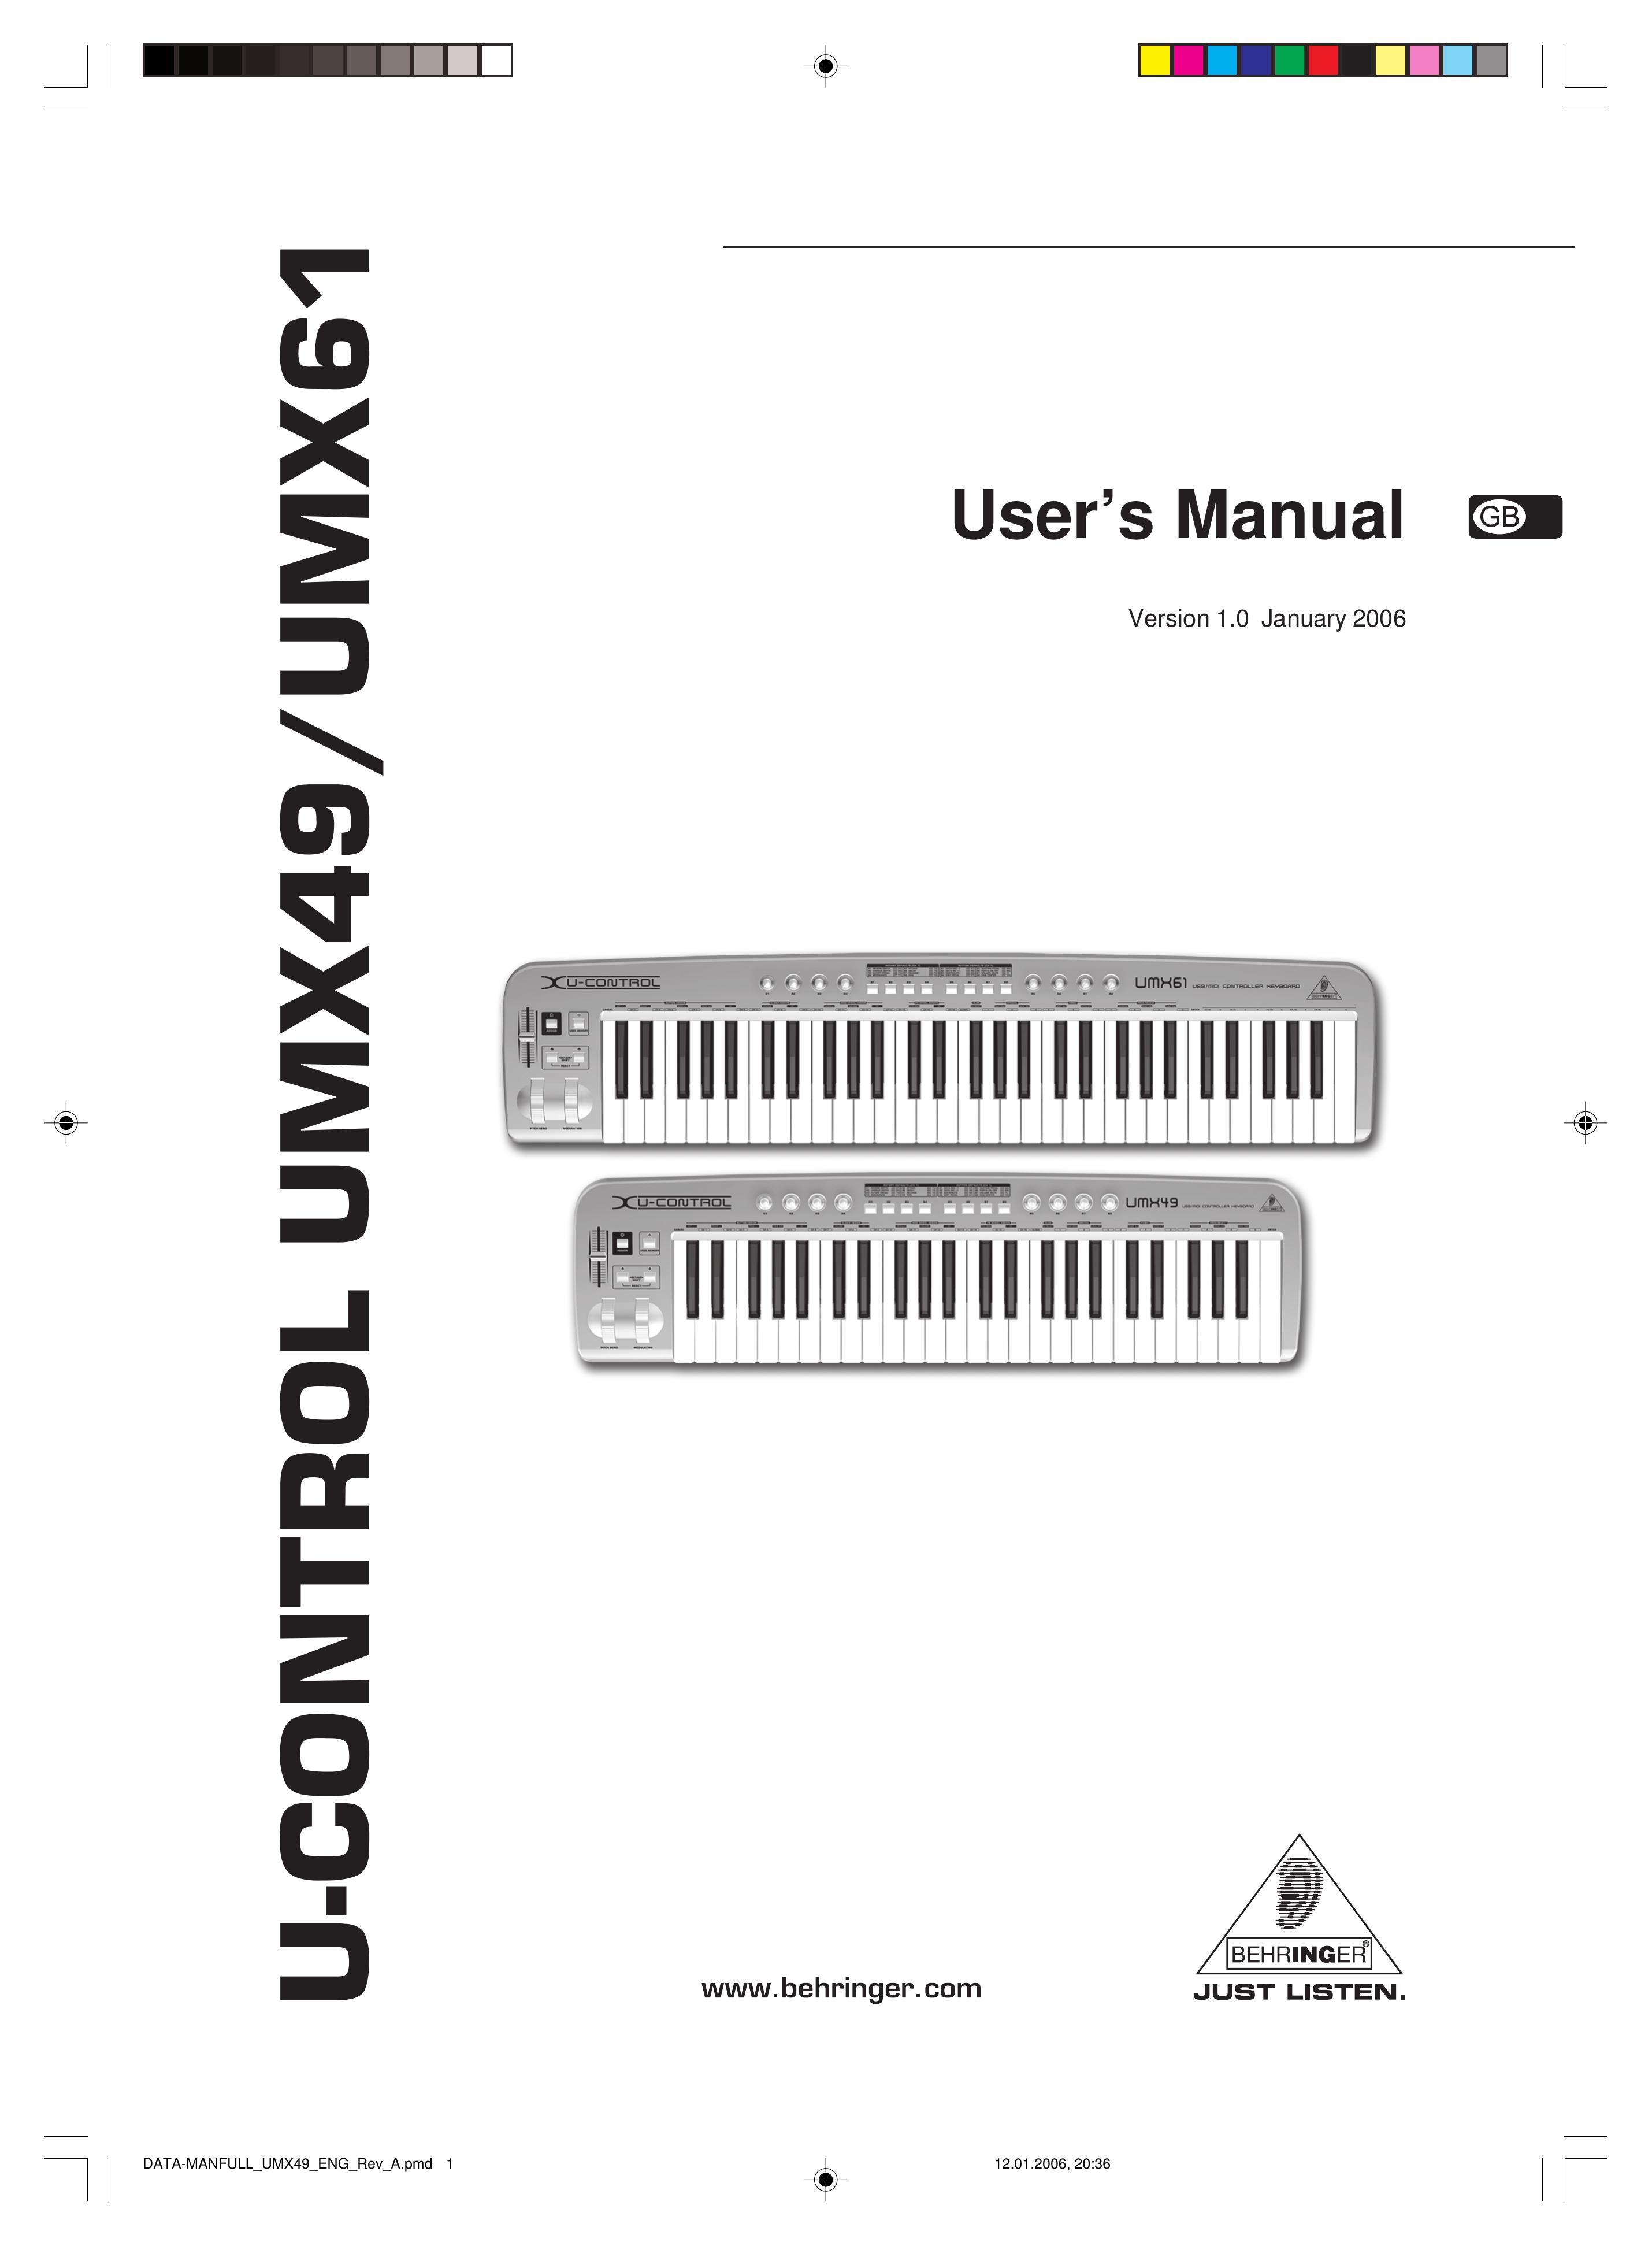 Behringer U-CONTROL UMX49 Electronic Keyboard User Manual